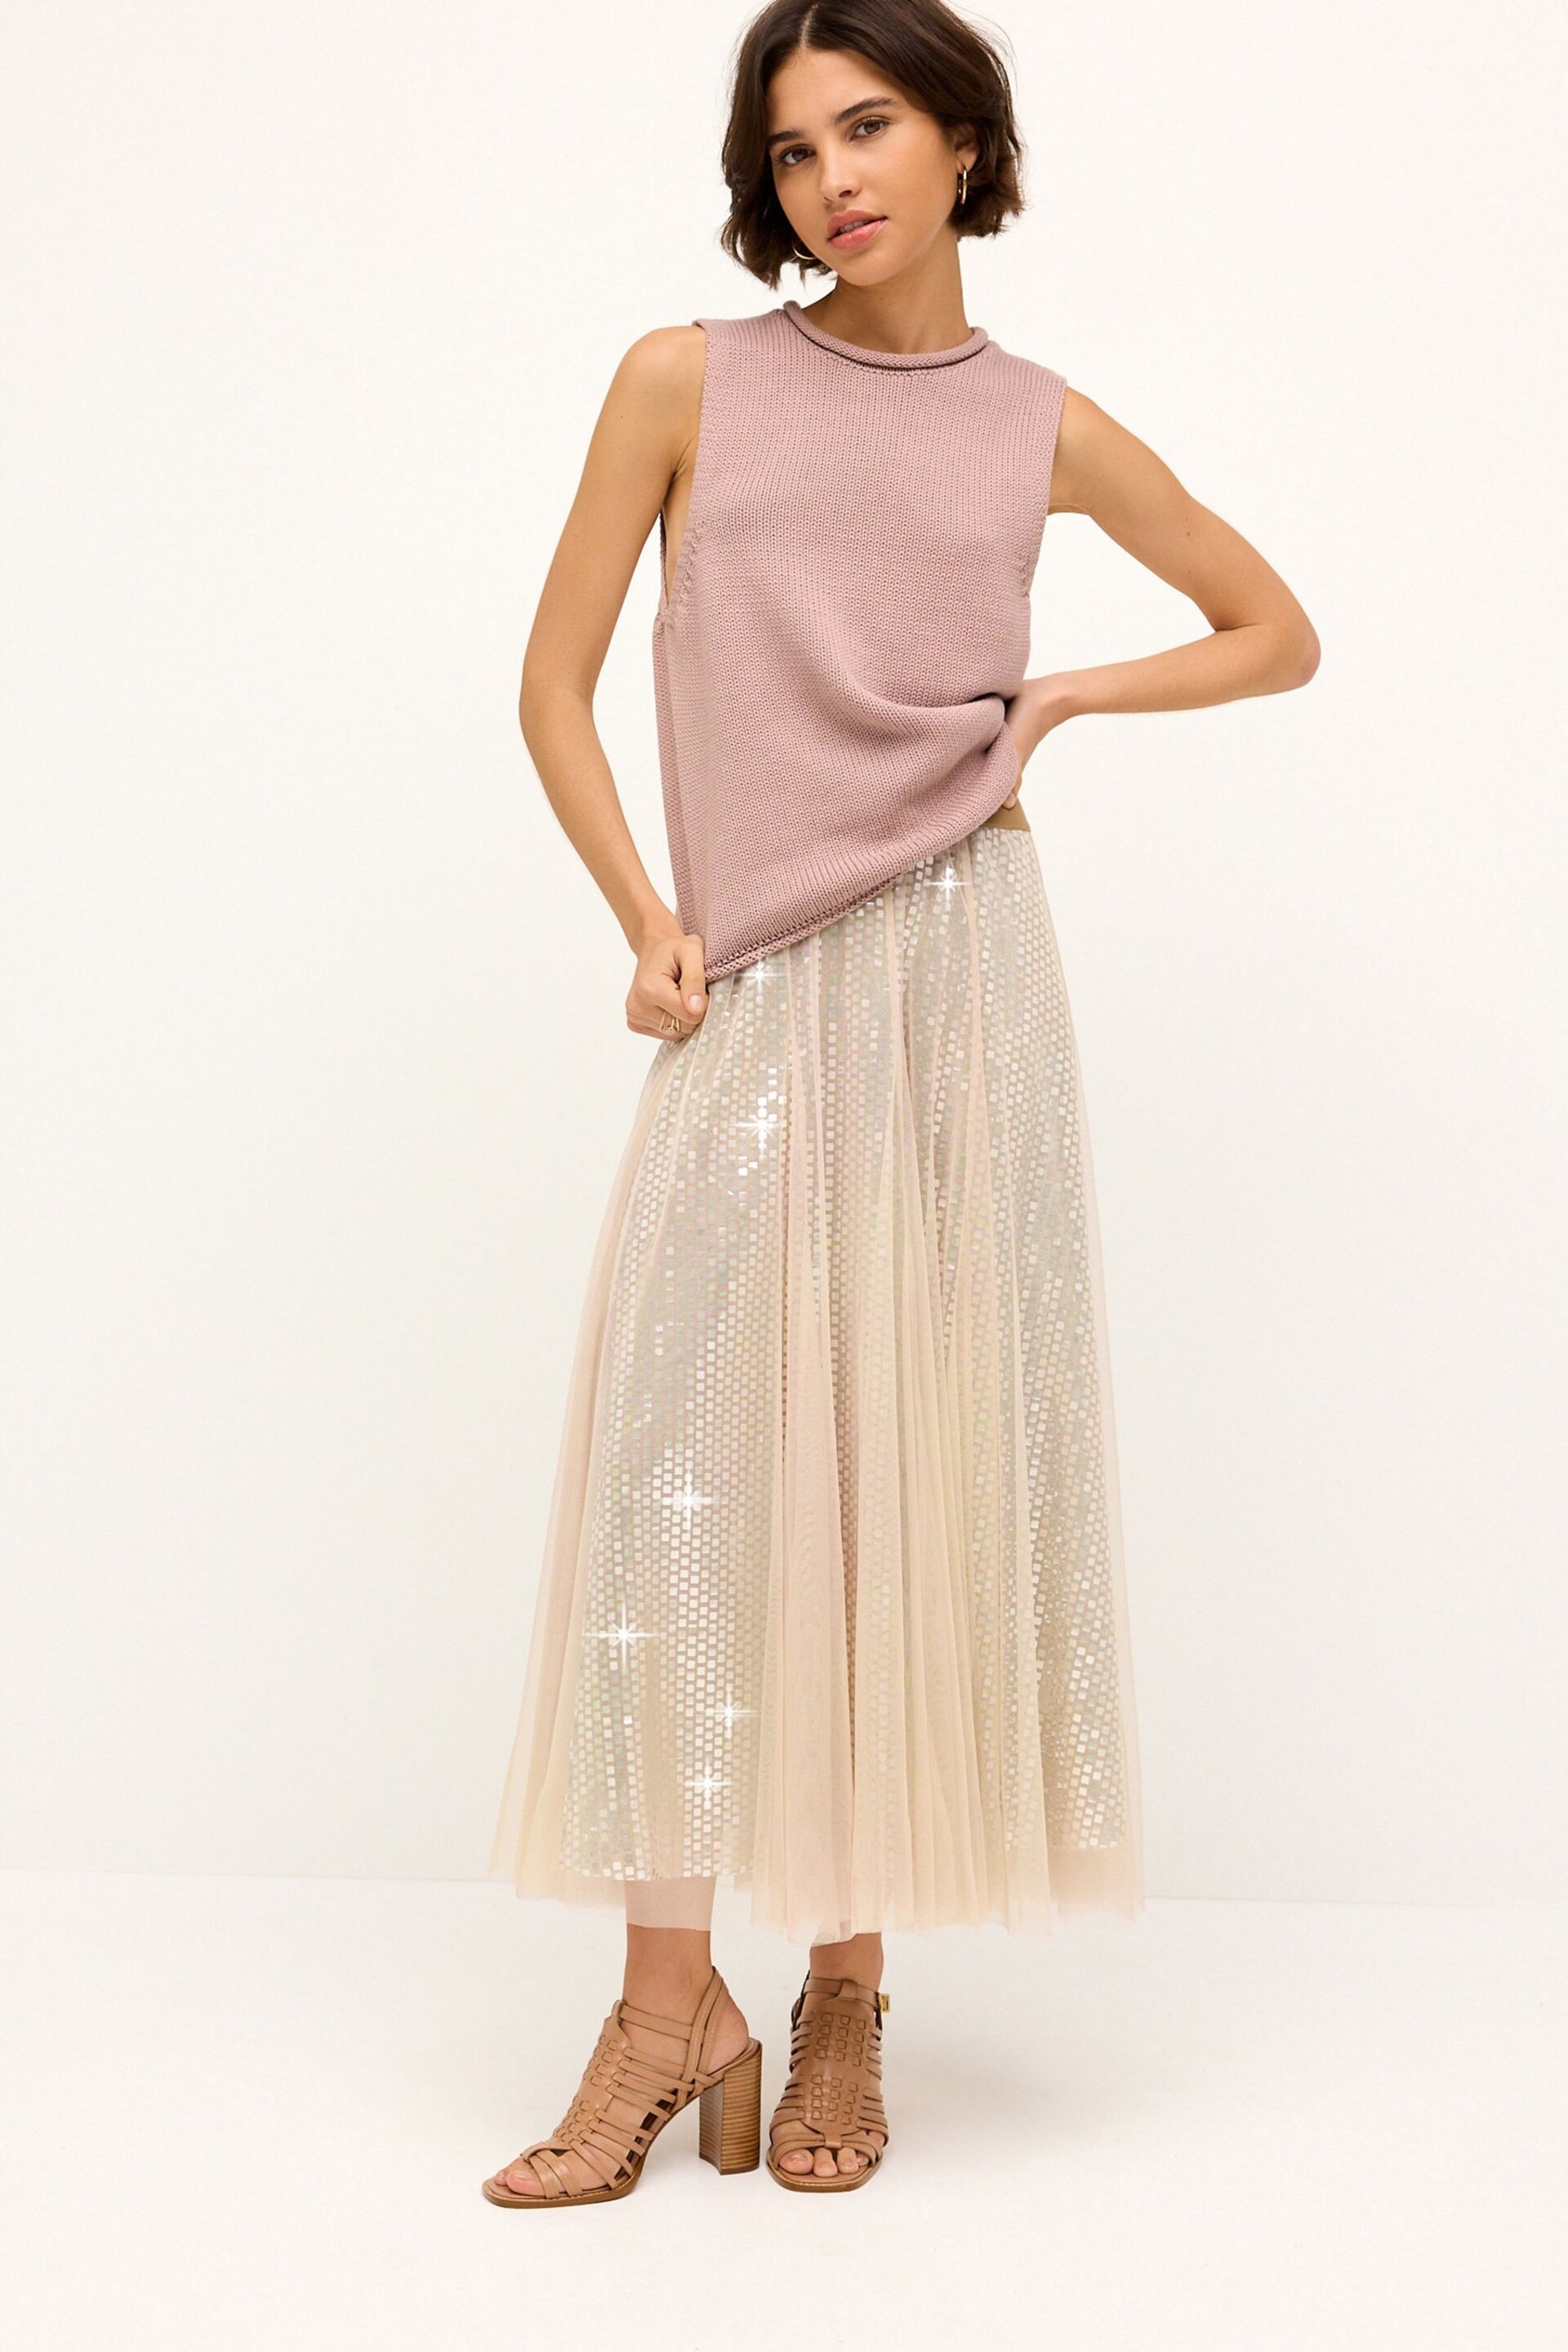 Neutral Sparkle Mesh Midi Skirt - Image 1 of 6